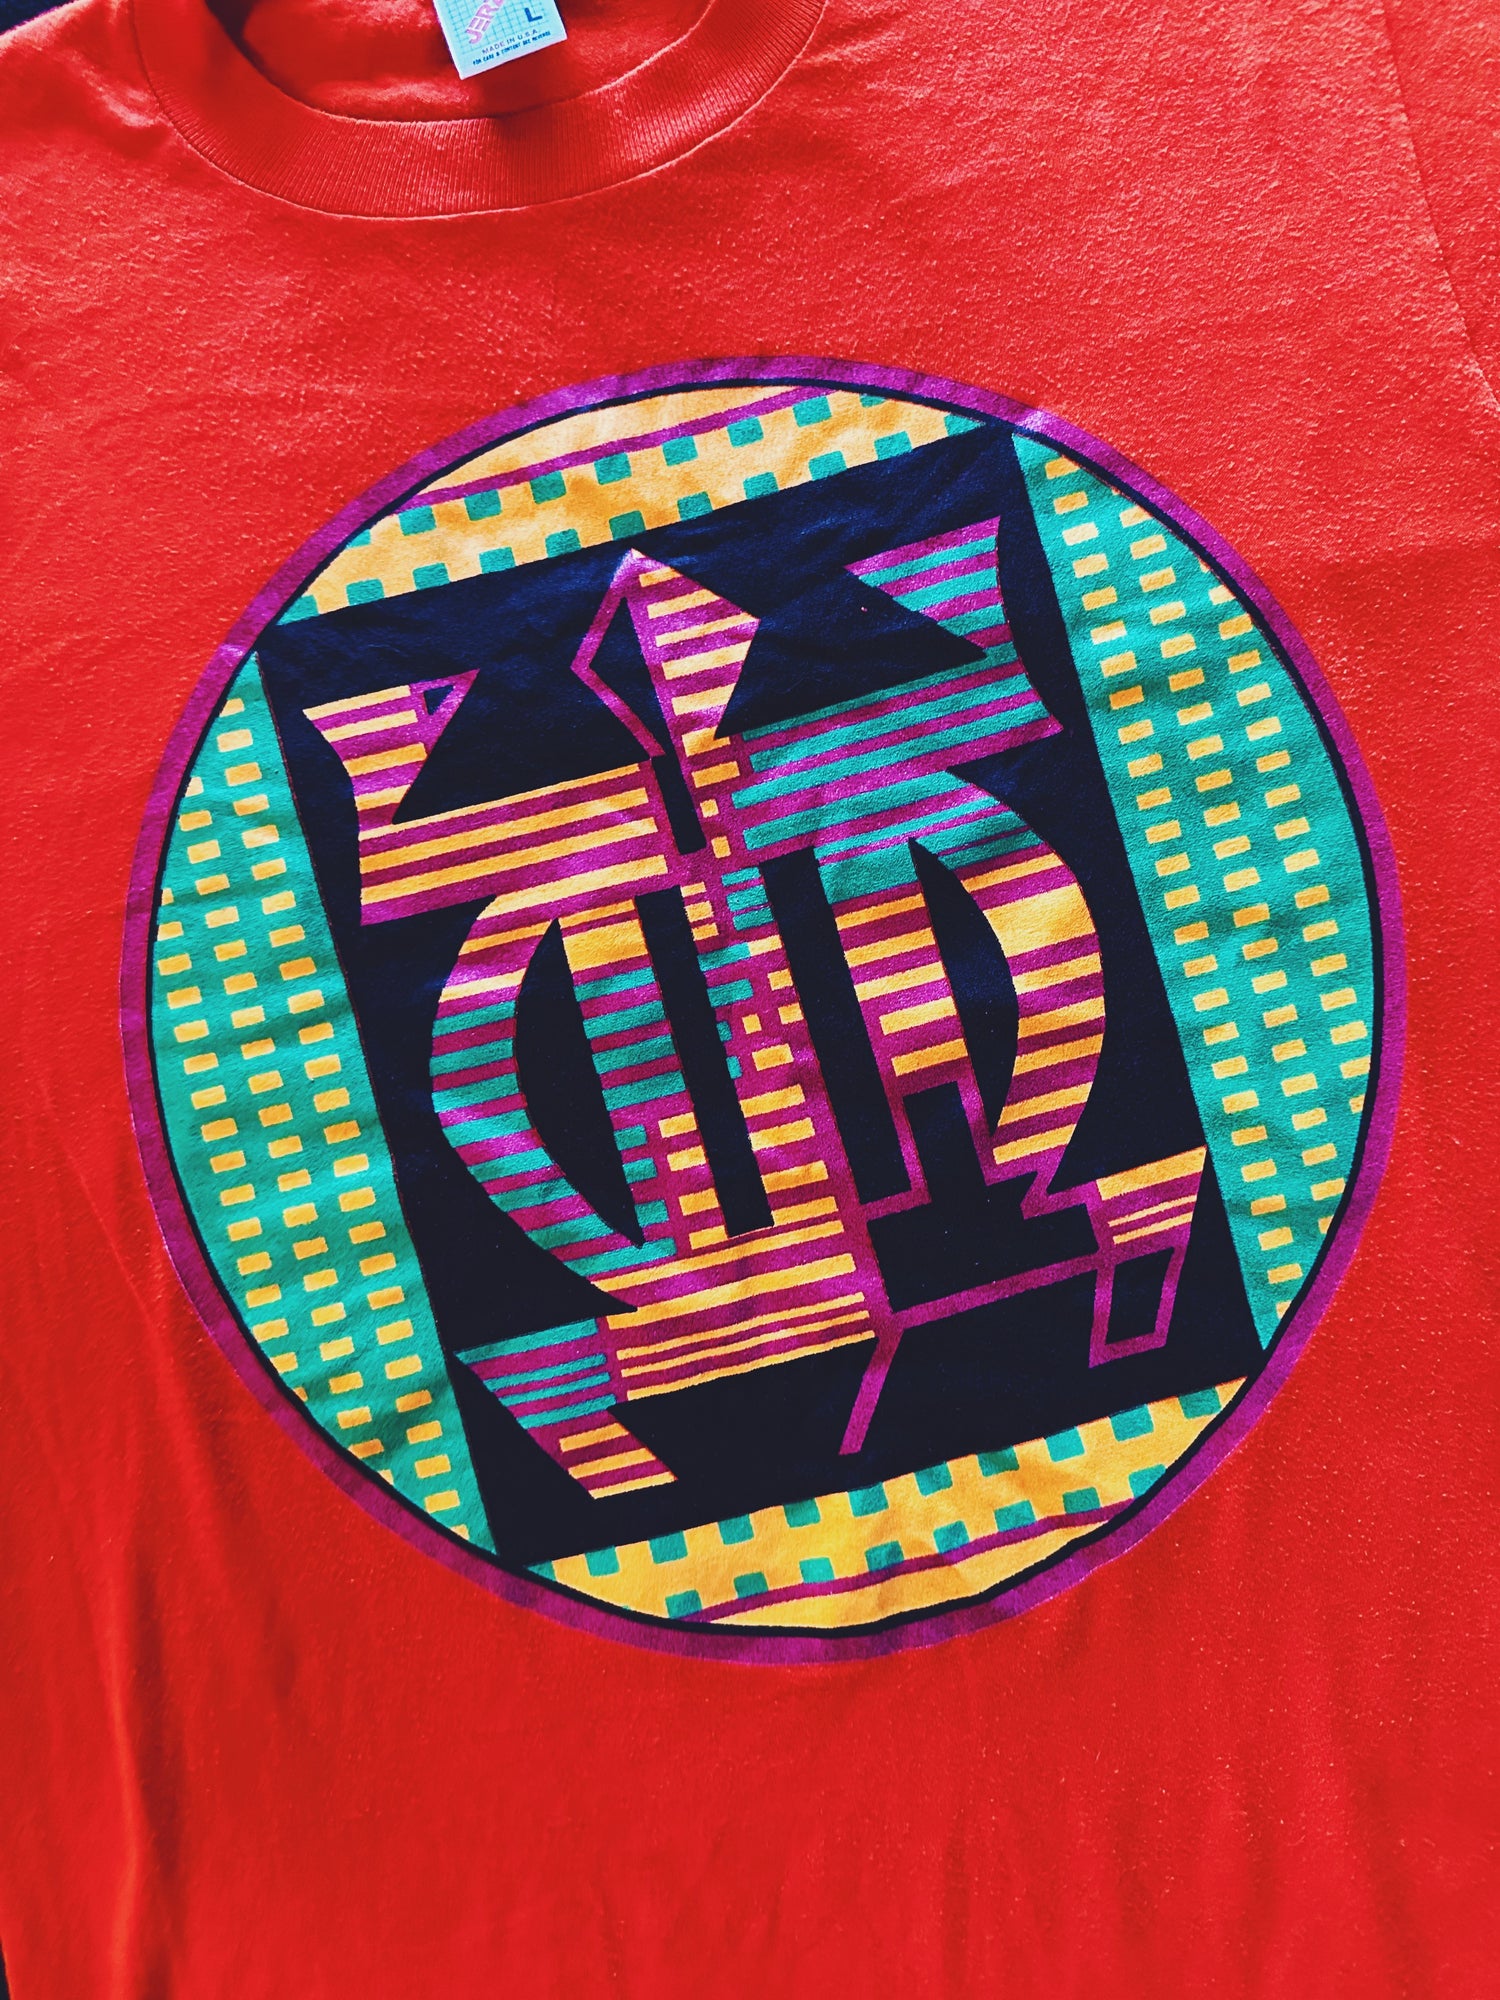 Vintage Adinkra symbol T-Shirt (1990’s)